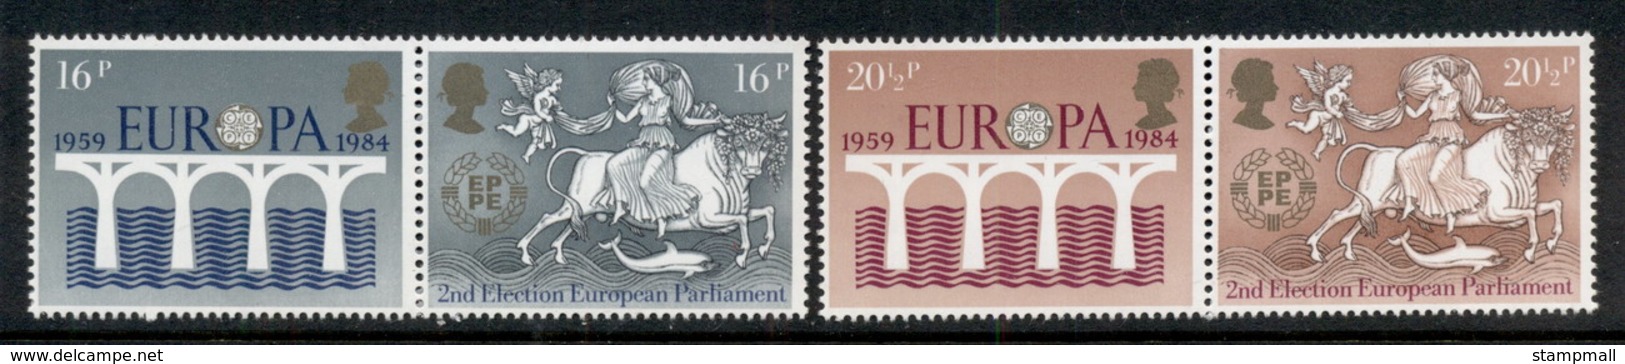 GB 1984 Europa, European Parliament MUH - Zonder Classificatie